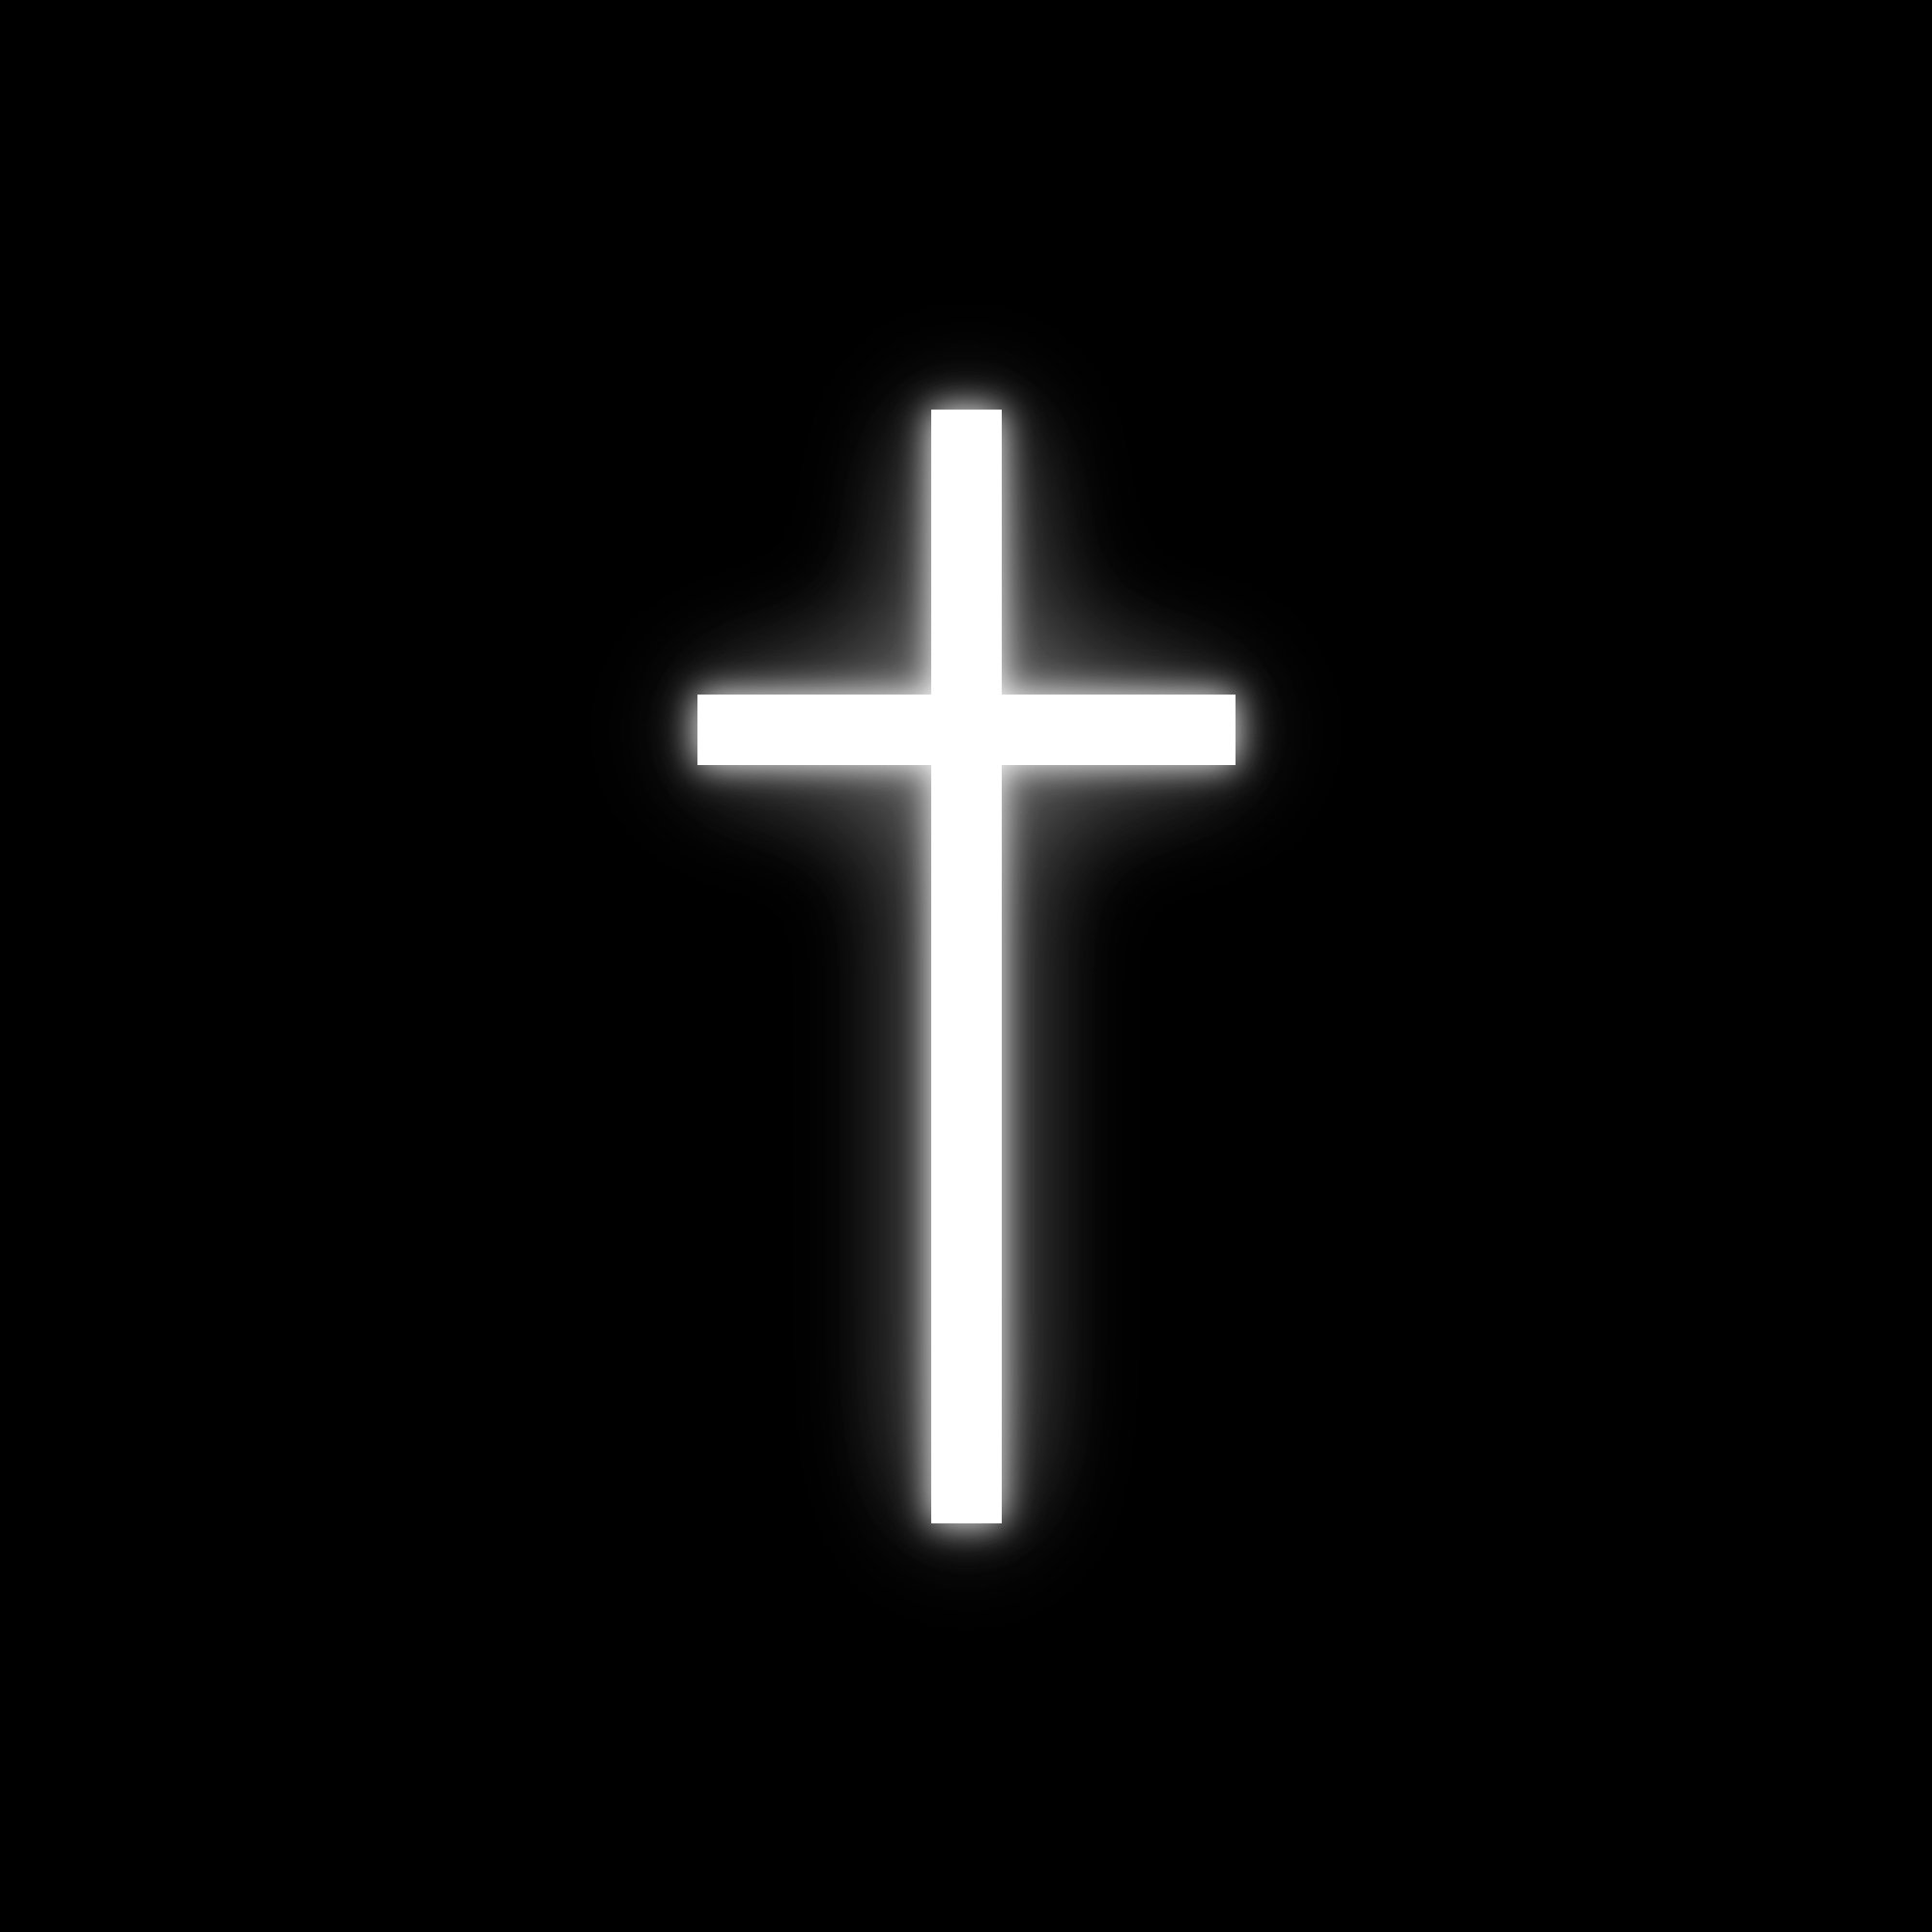 Исповедь креста. Крест на черном фоне. Крест на темном фоне. Крест во тьме. Христианский крест на черном фоне.